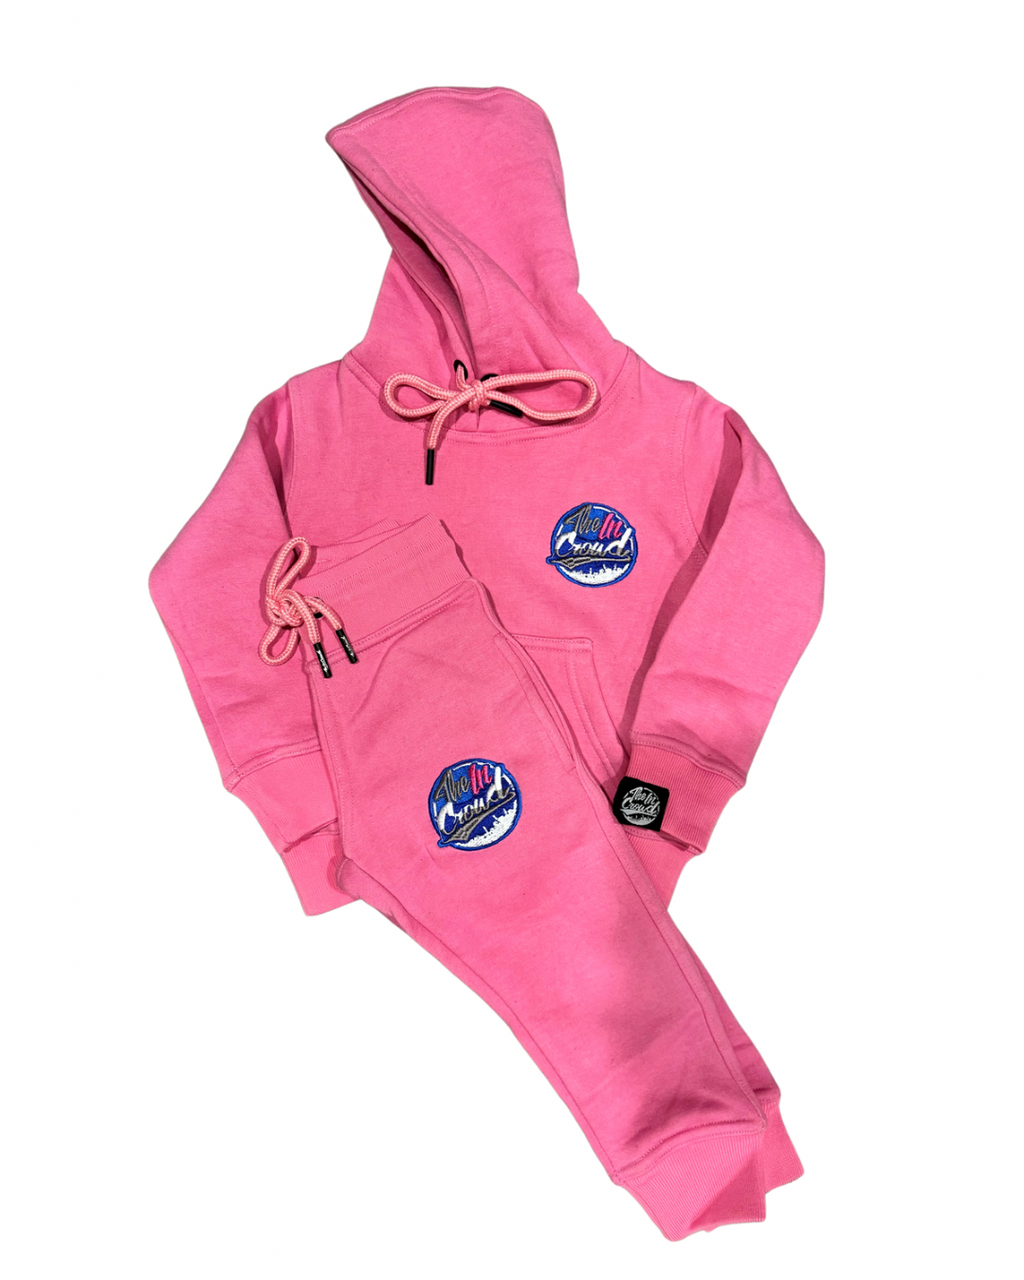 Kid’s Pink Sweatsuit